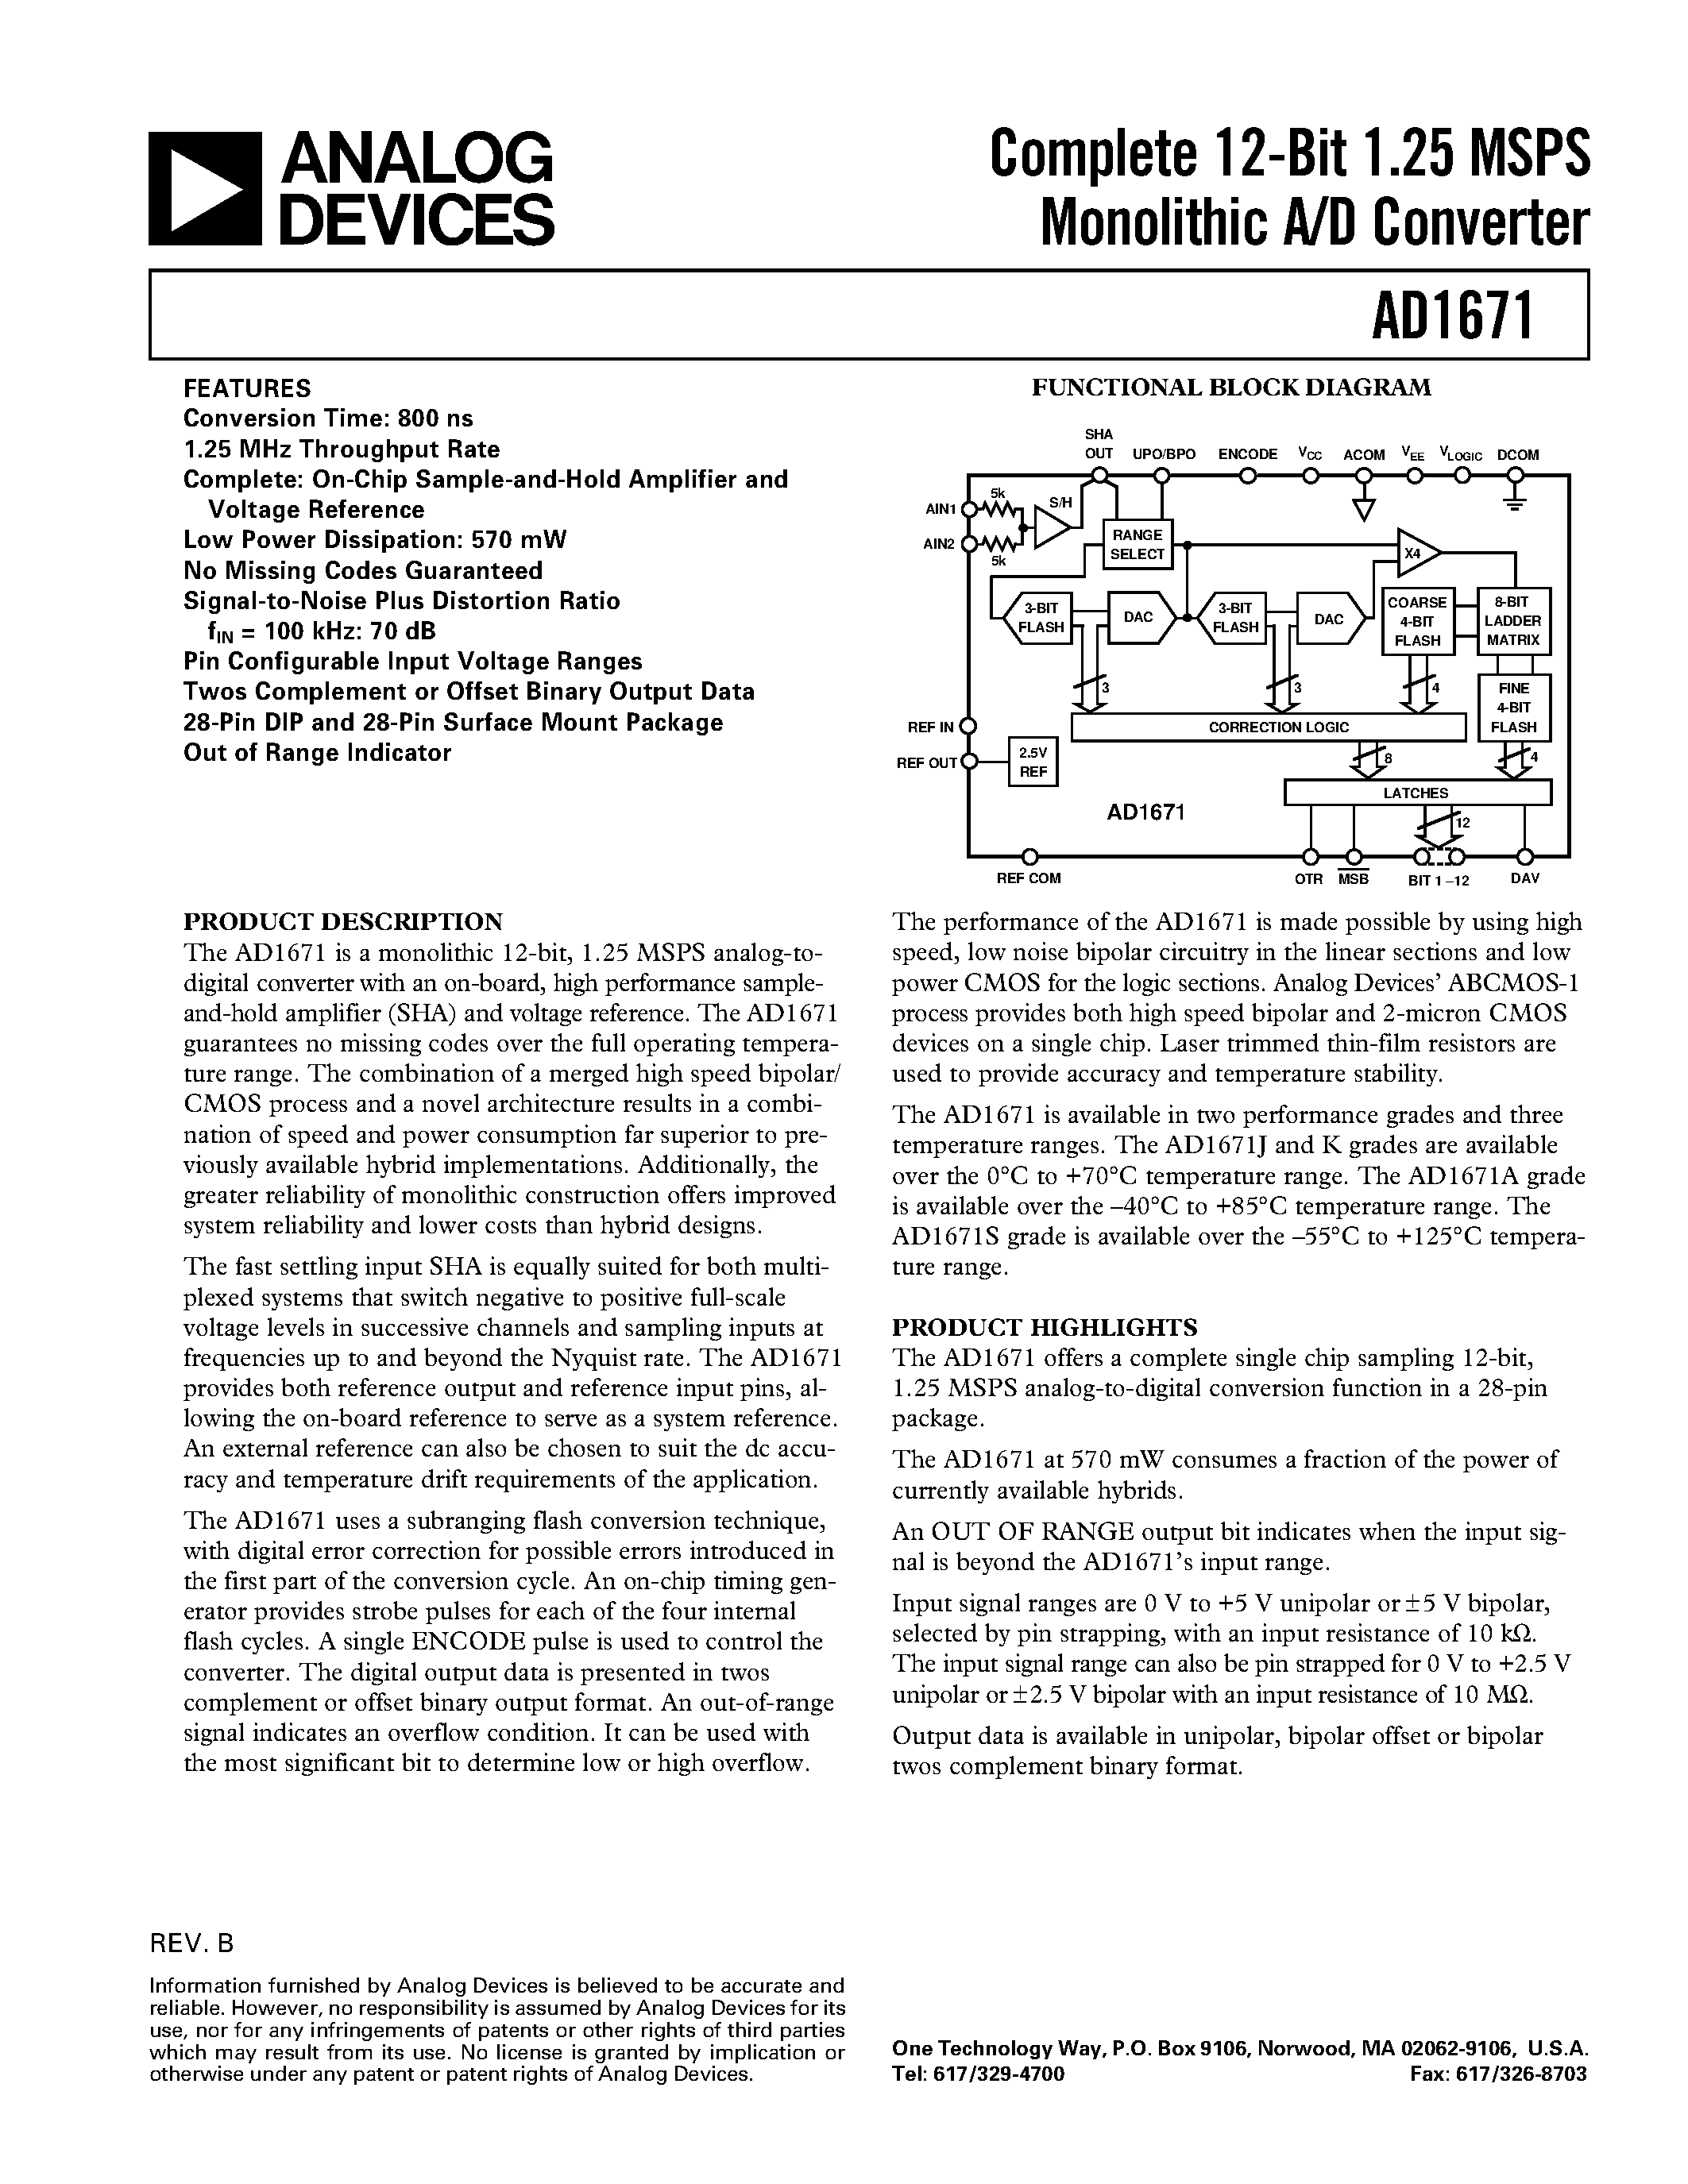 Datasheet AD1671J - Complete 12-Bit 1.25 MSPS Monolithic A/D Converter page 1